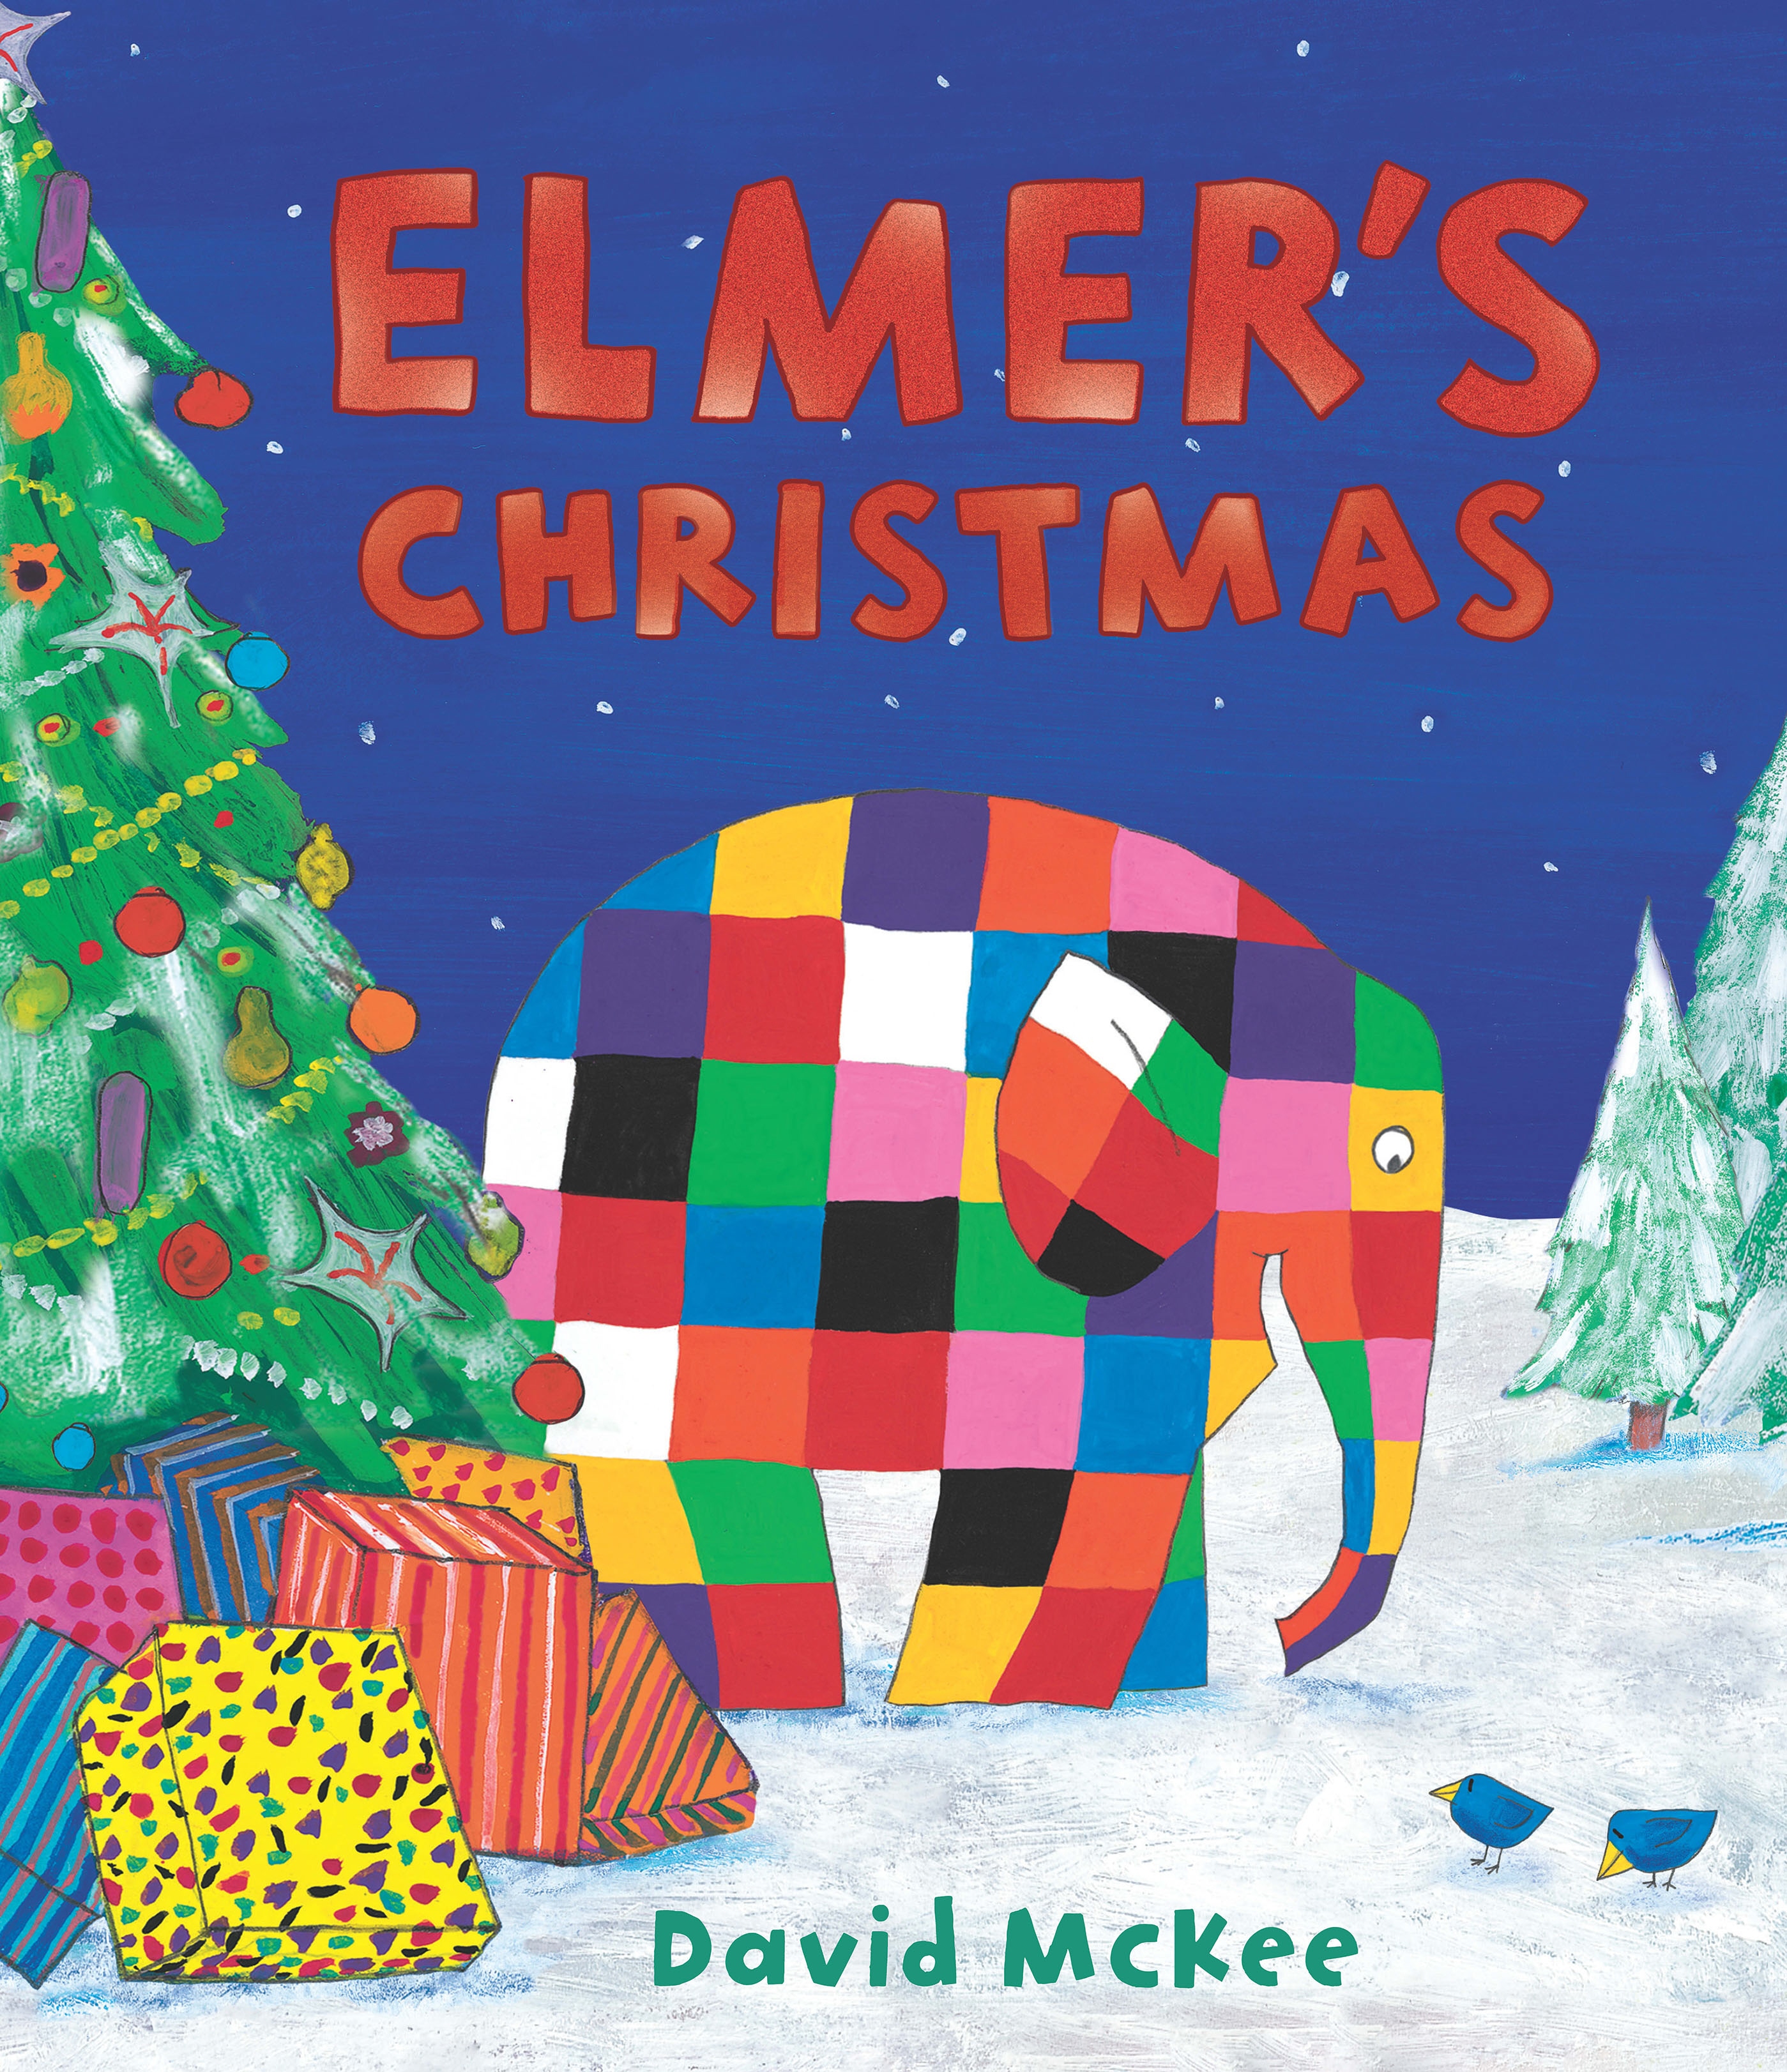 Book “Elmer's Christmas” by David McKee — September 7, 2017